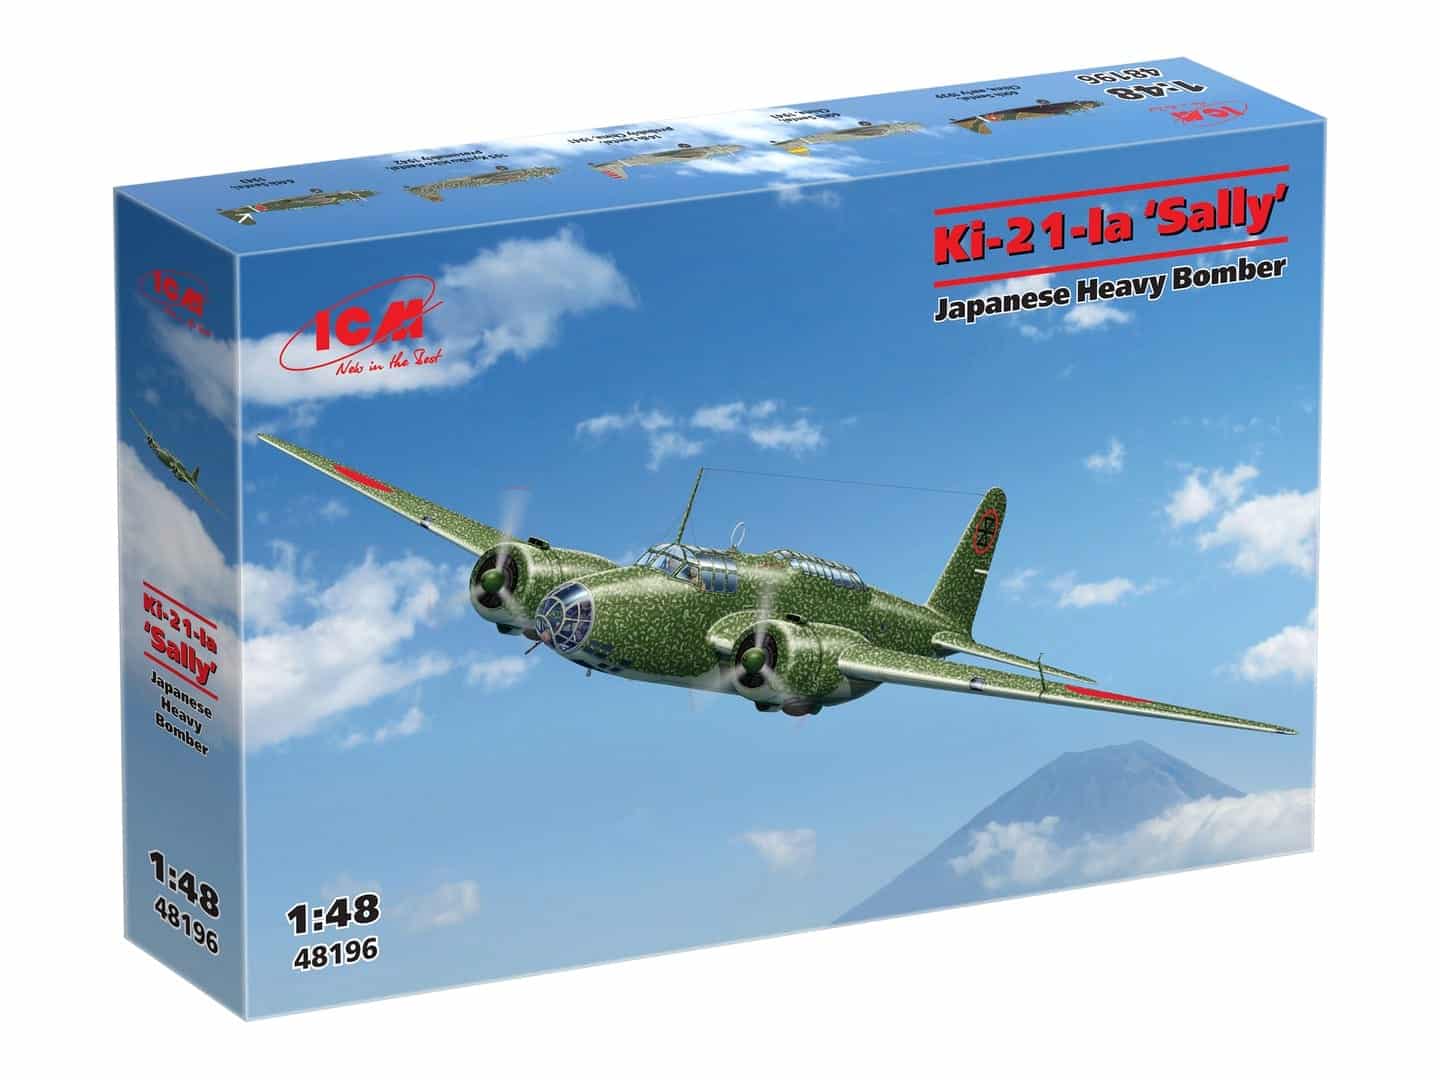 ICM - 1:48 Ki-21-la Sally Japanese Heavy Bomber (48196) Model Kit